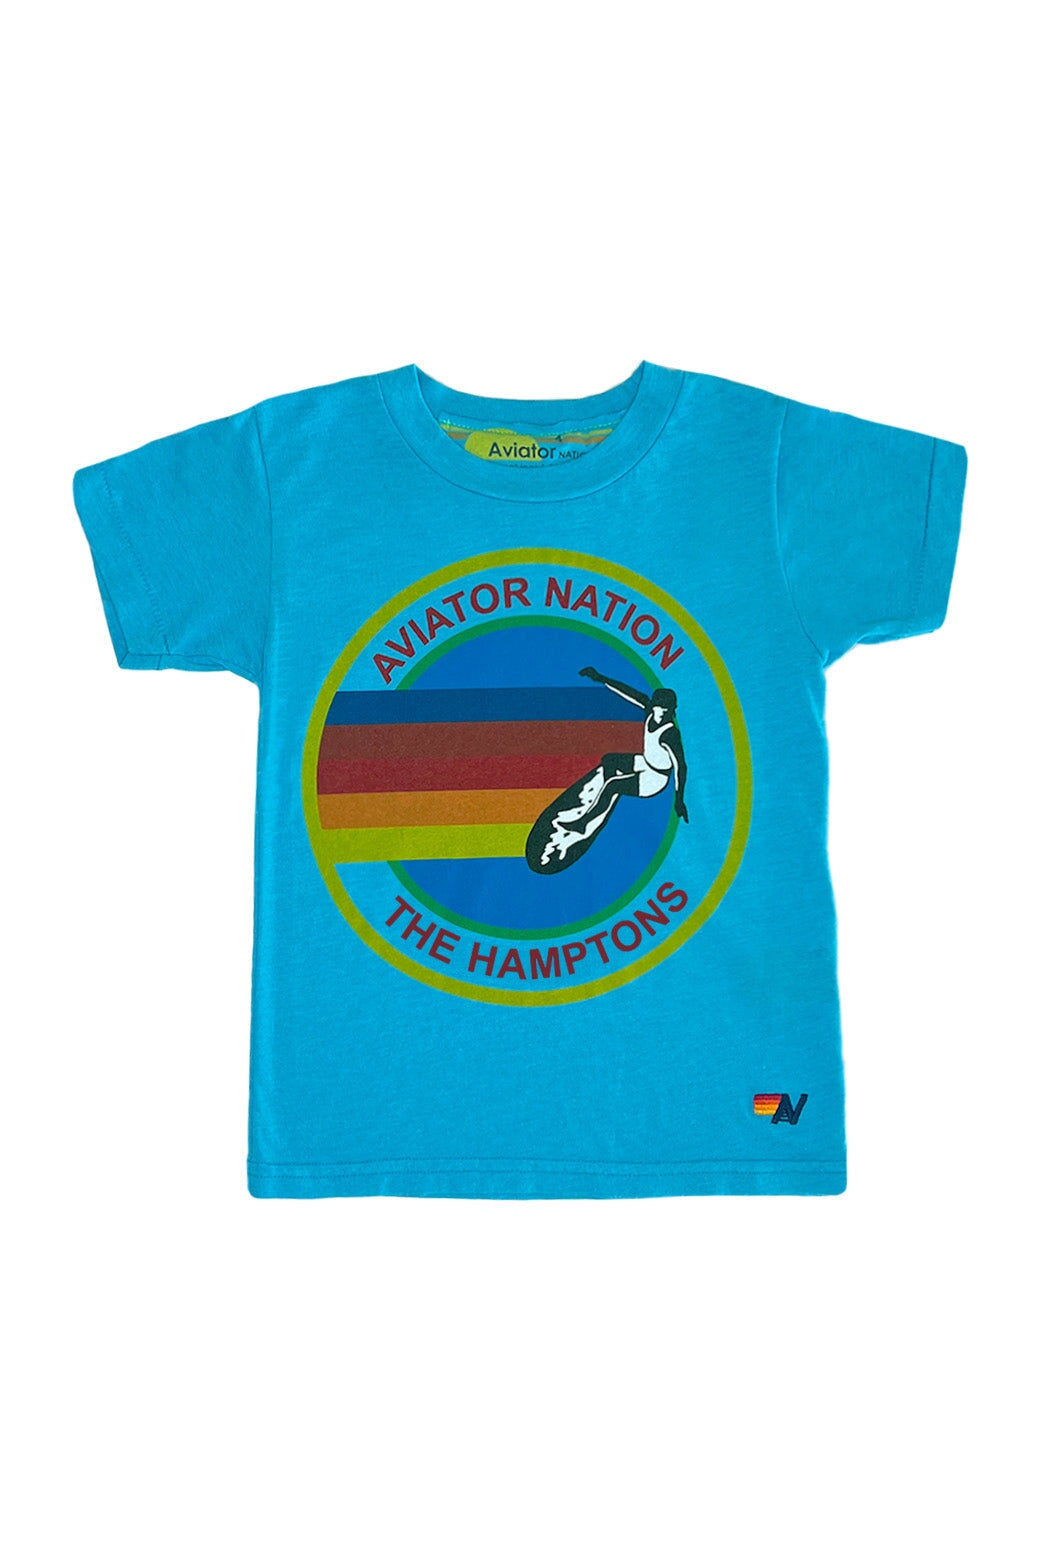 AVIATOR NATION HAMPTONS KIDS TEE - NEON BLUE Kid's Tee Aviator Nation 